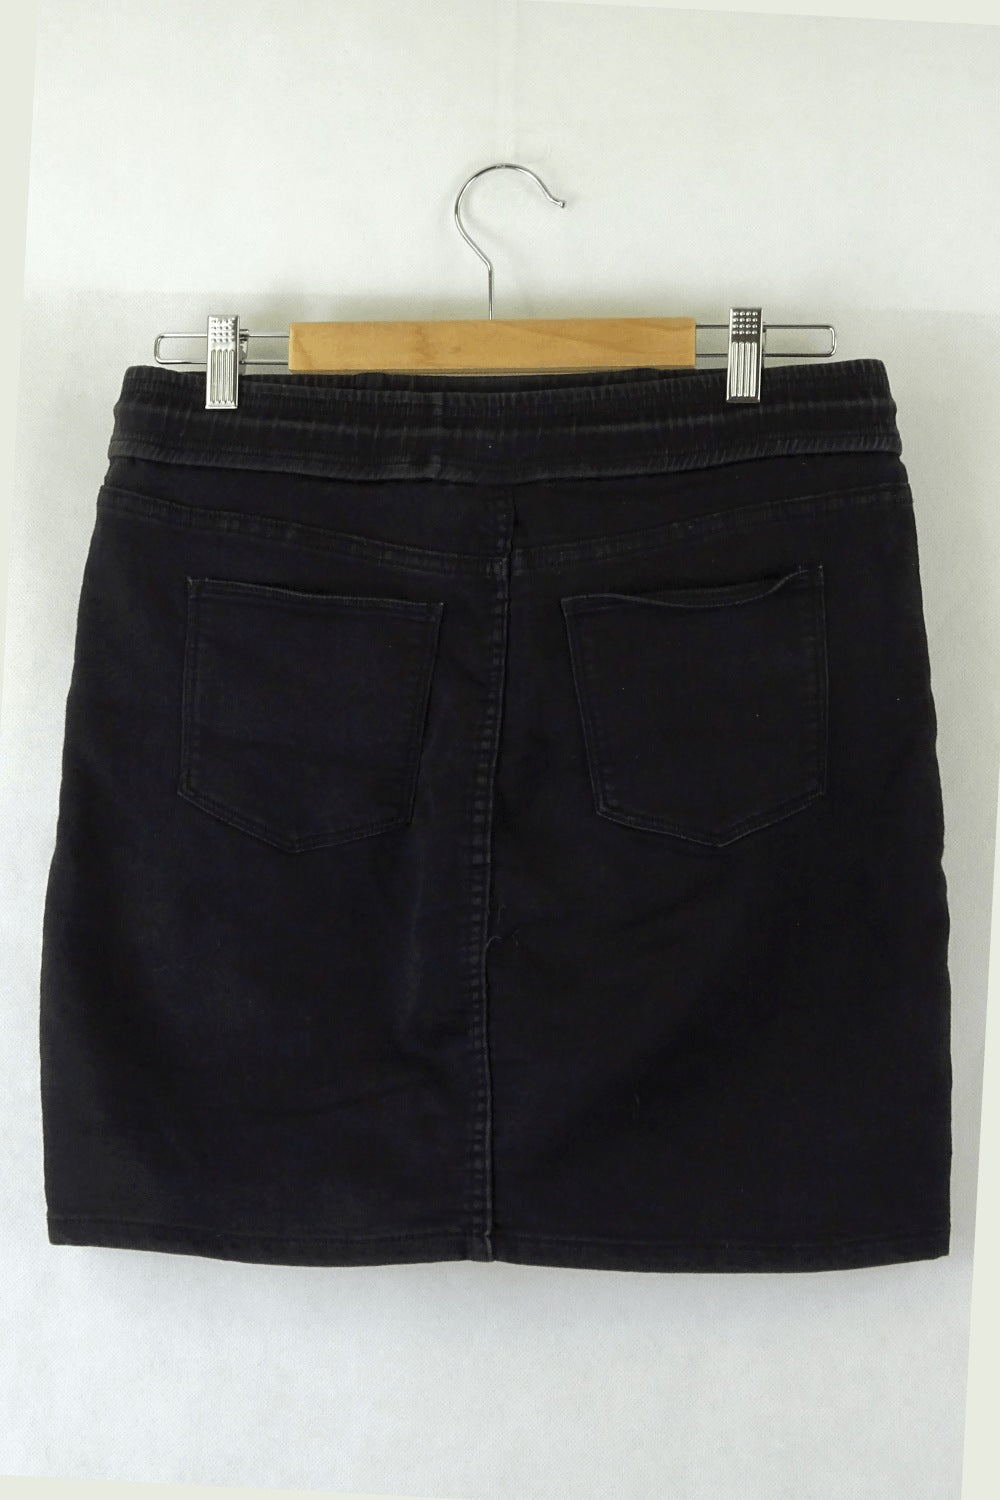 Jeanswest Black Skirt 10